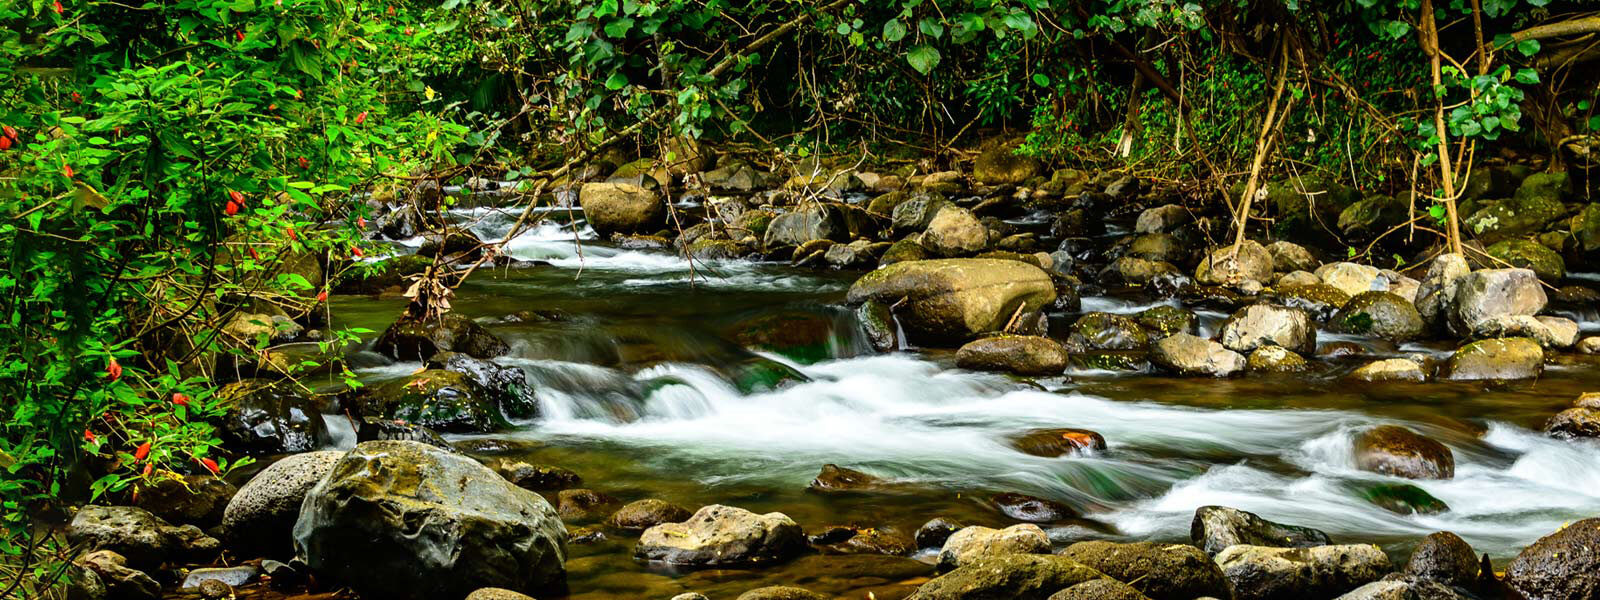 water flowing over rocks in stream